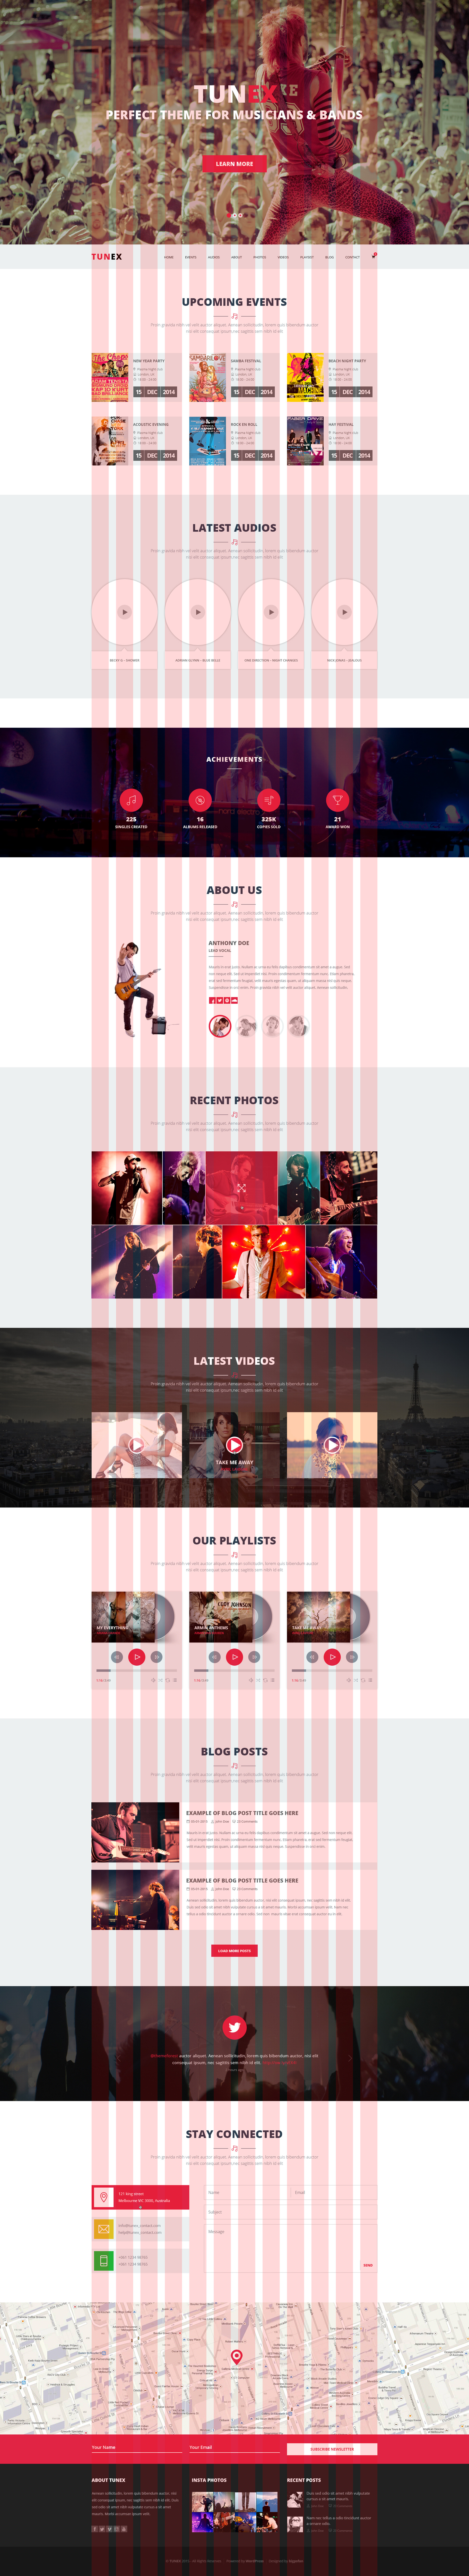 TUNEX - Music & Entertainment PSD Template